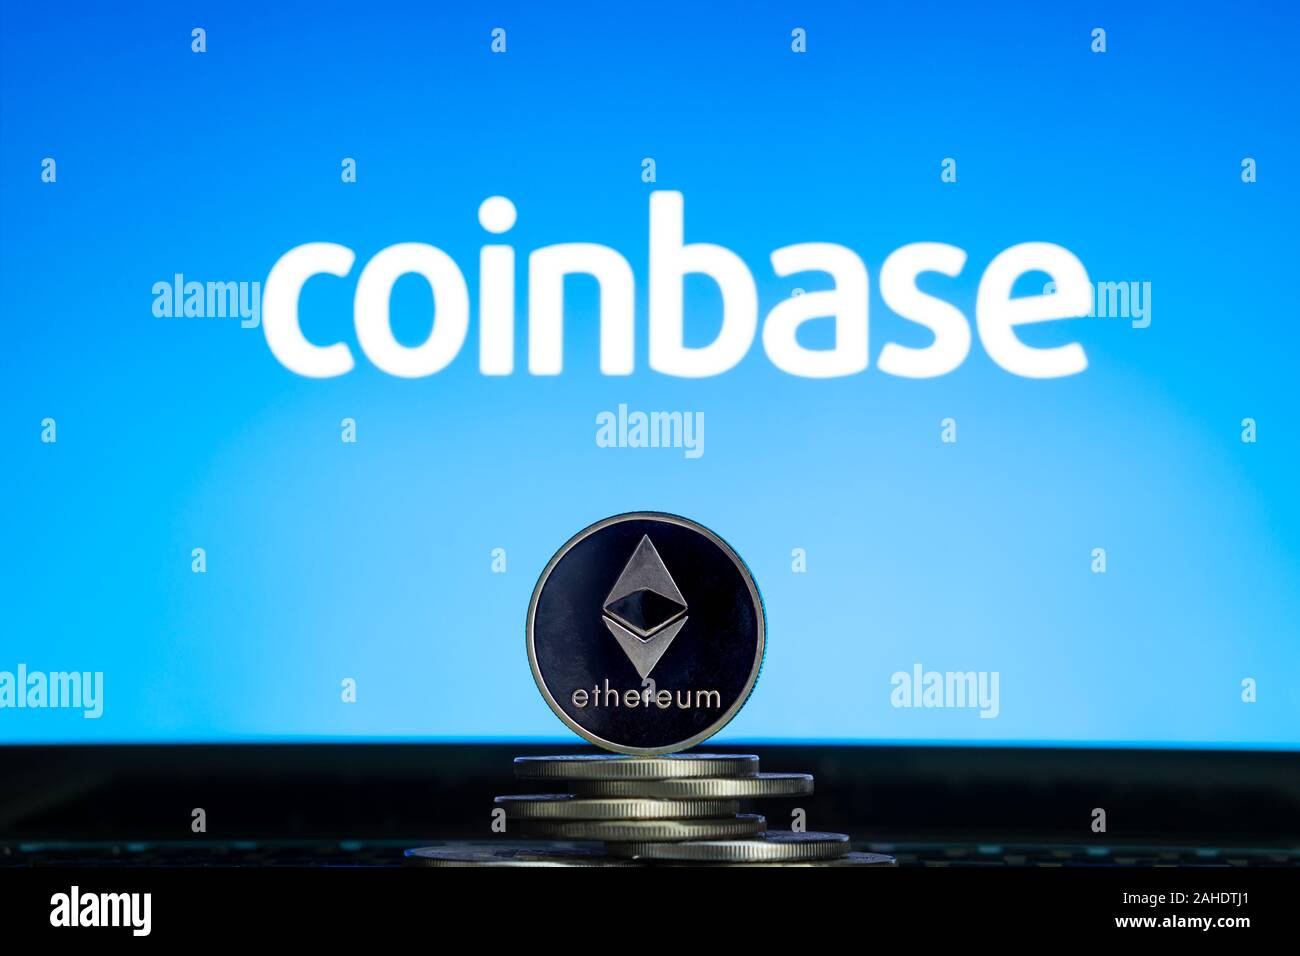 Ethereum coins with Coinbase logo on a laptop screen. Slovenia, Ljubljana - 02 24 2019 Stock Photo